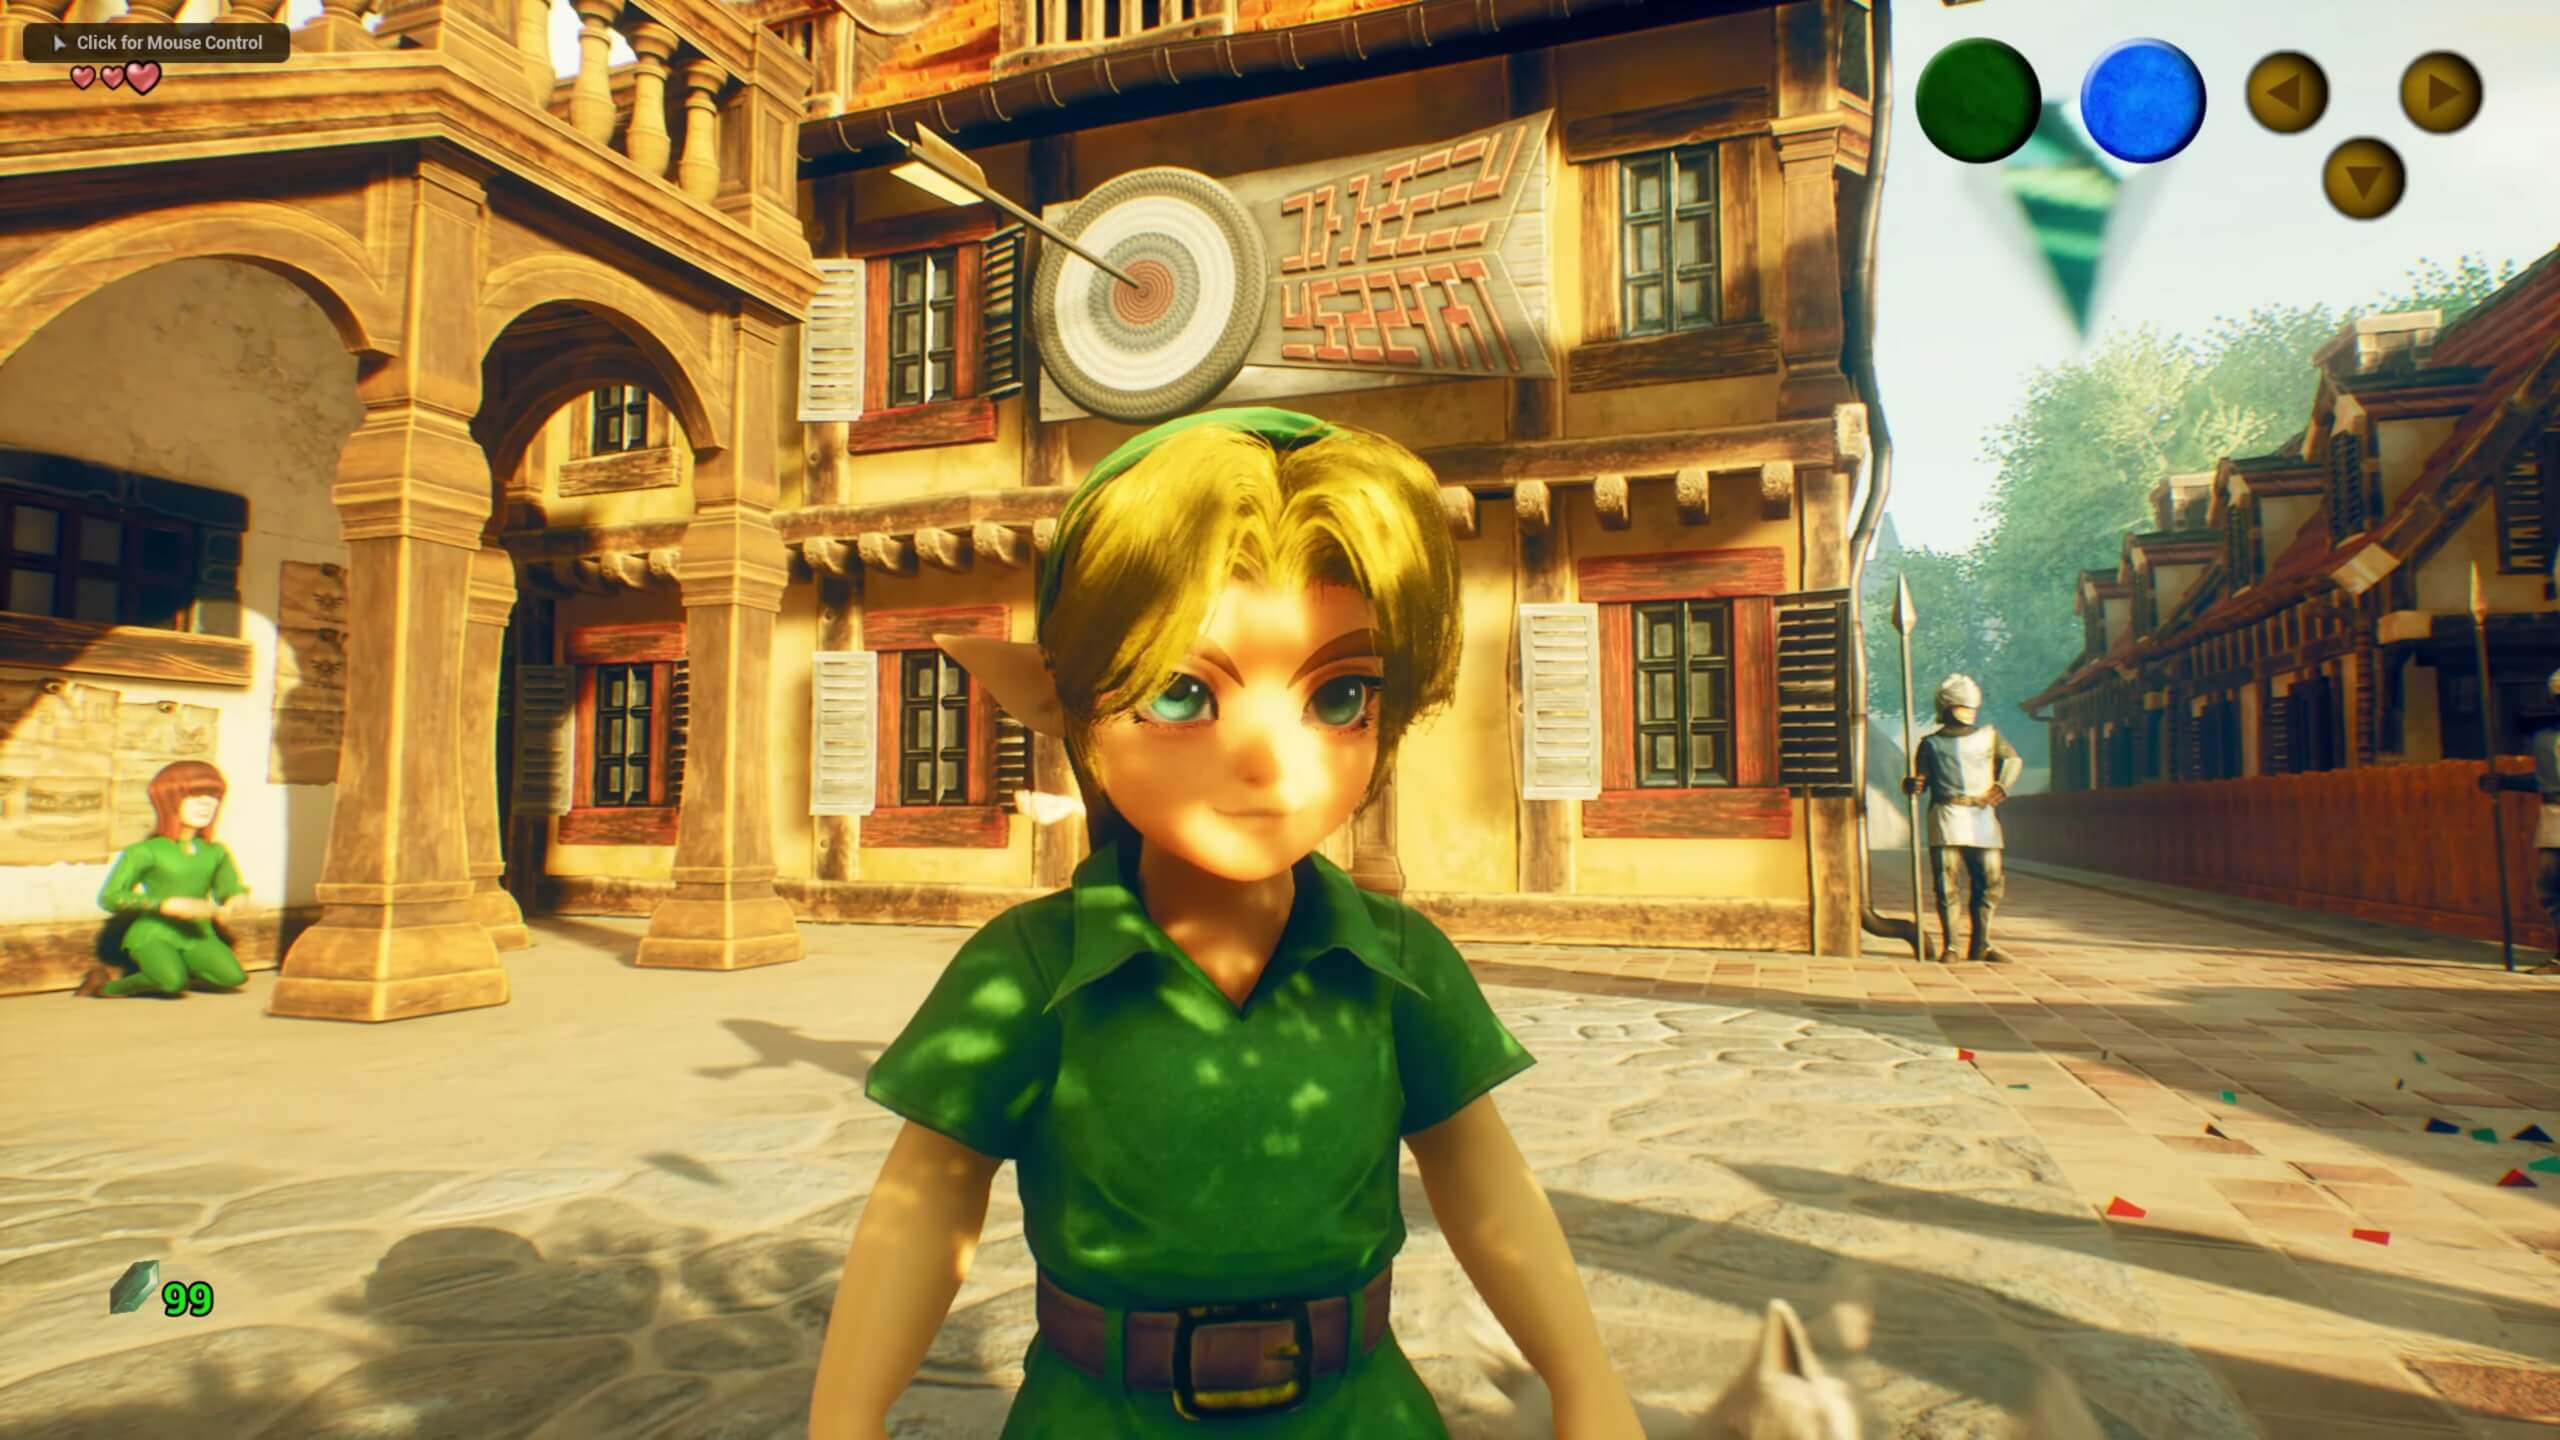 Legend of Zelda - Ocarina of Time - new Trailer 